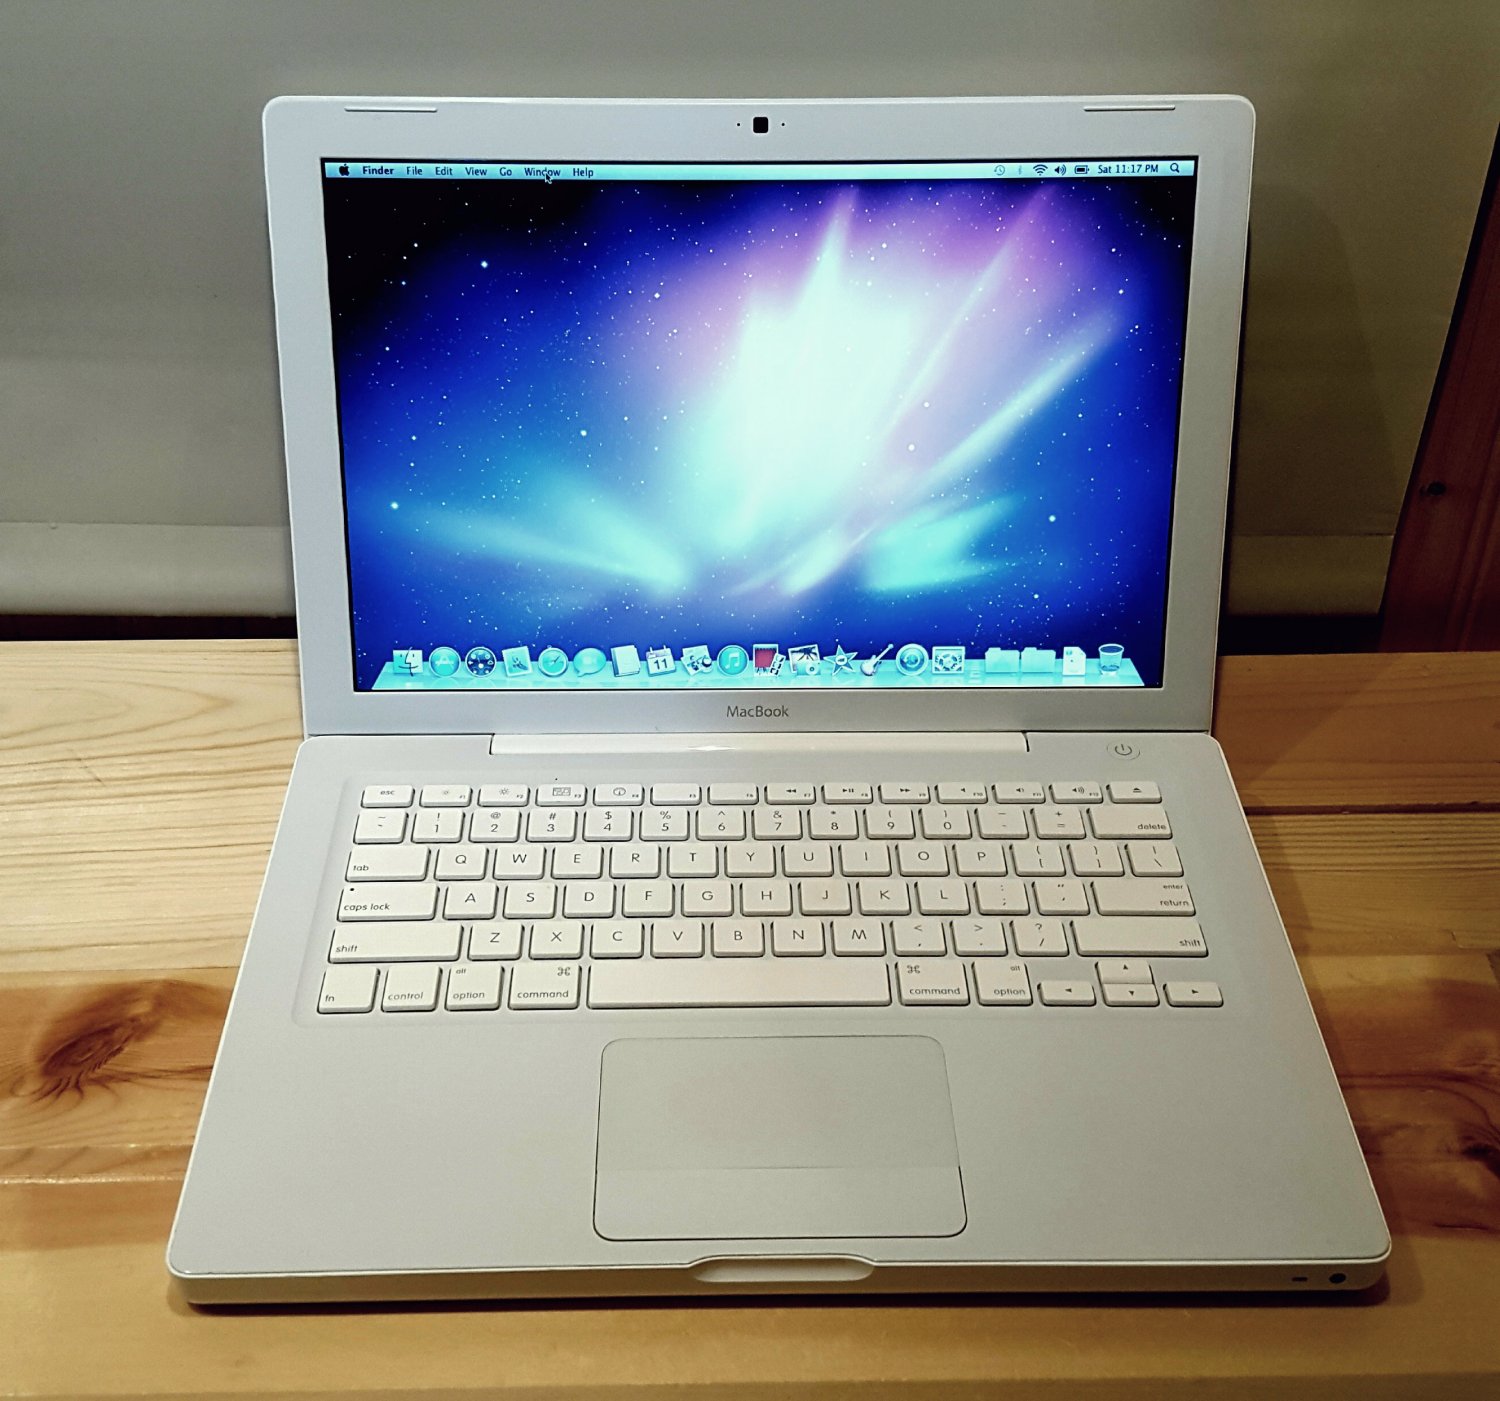 macbook a1181 latest os